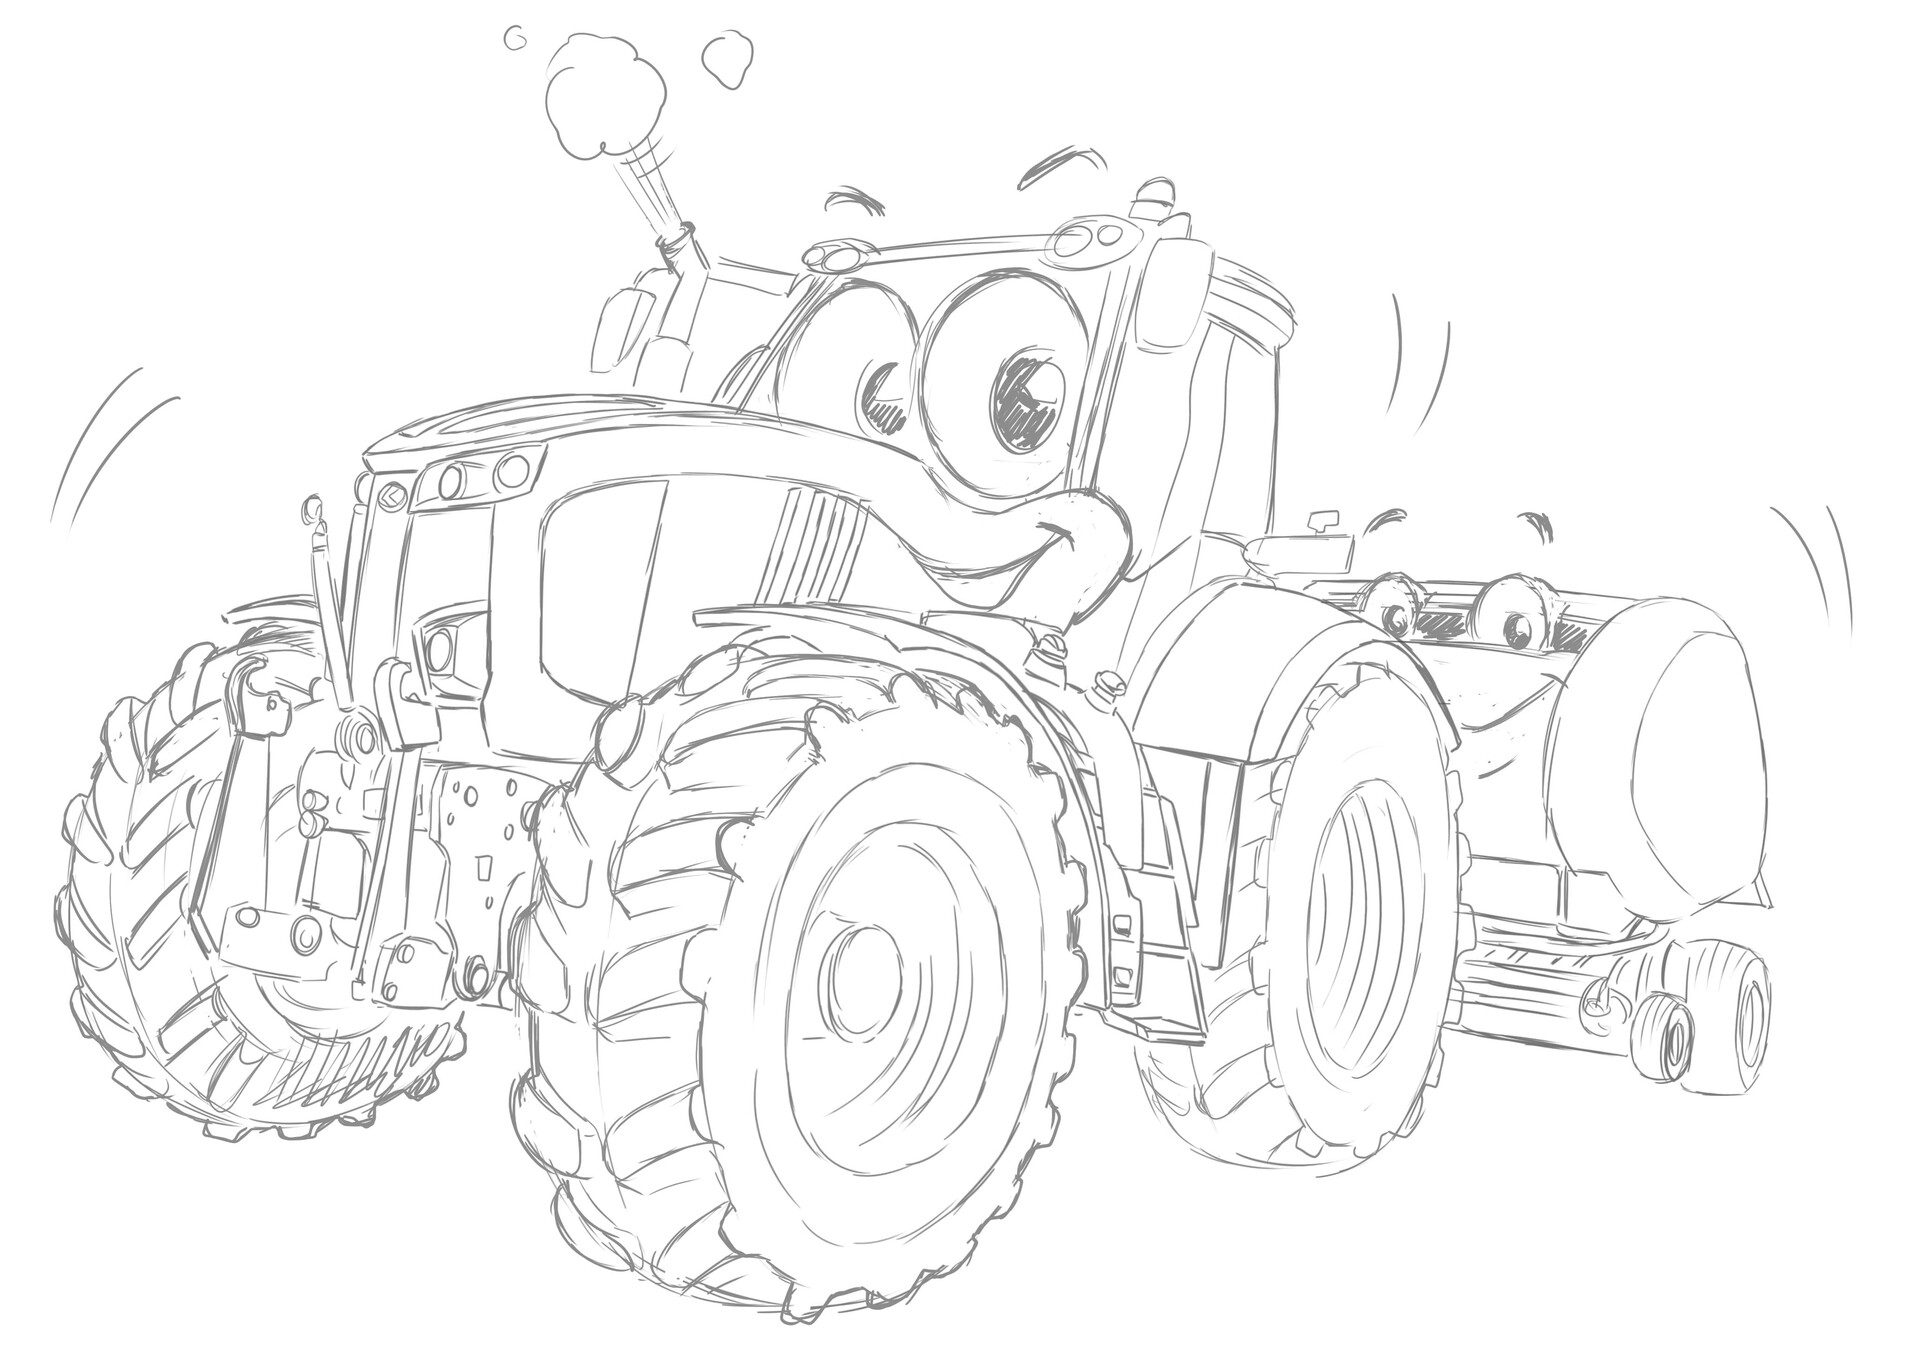 ArtStation - kubota cartoon tractor